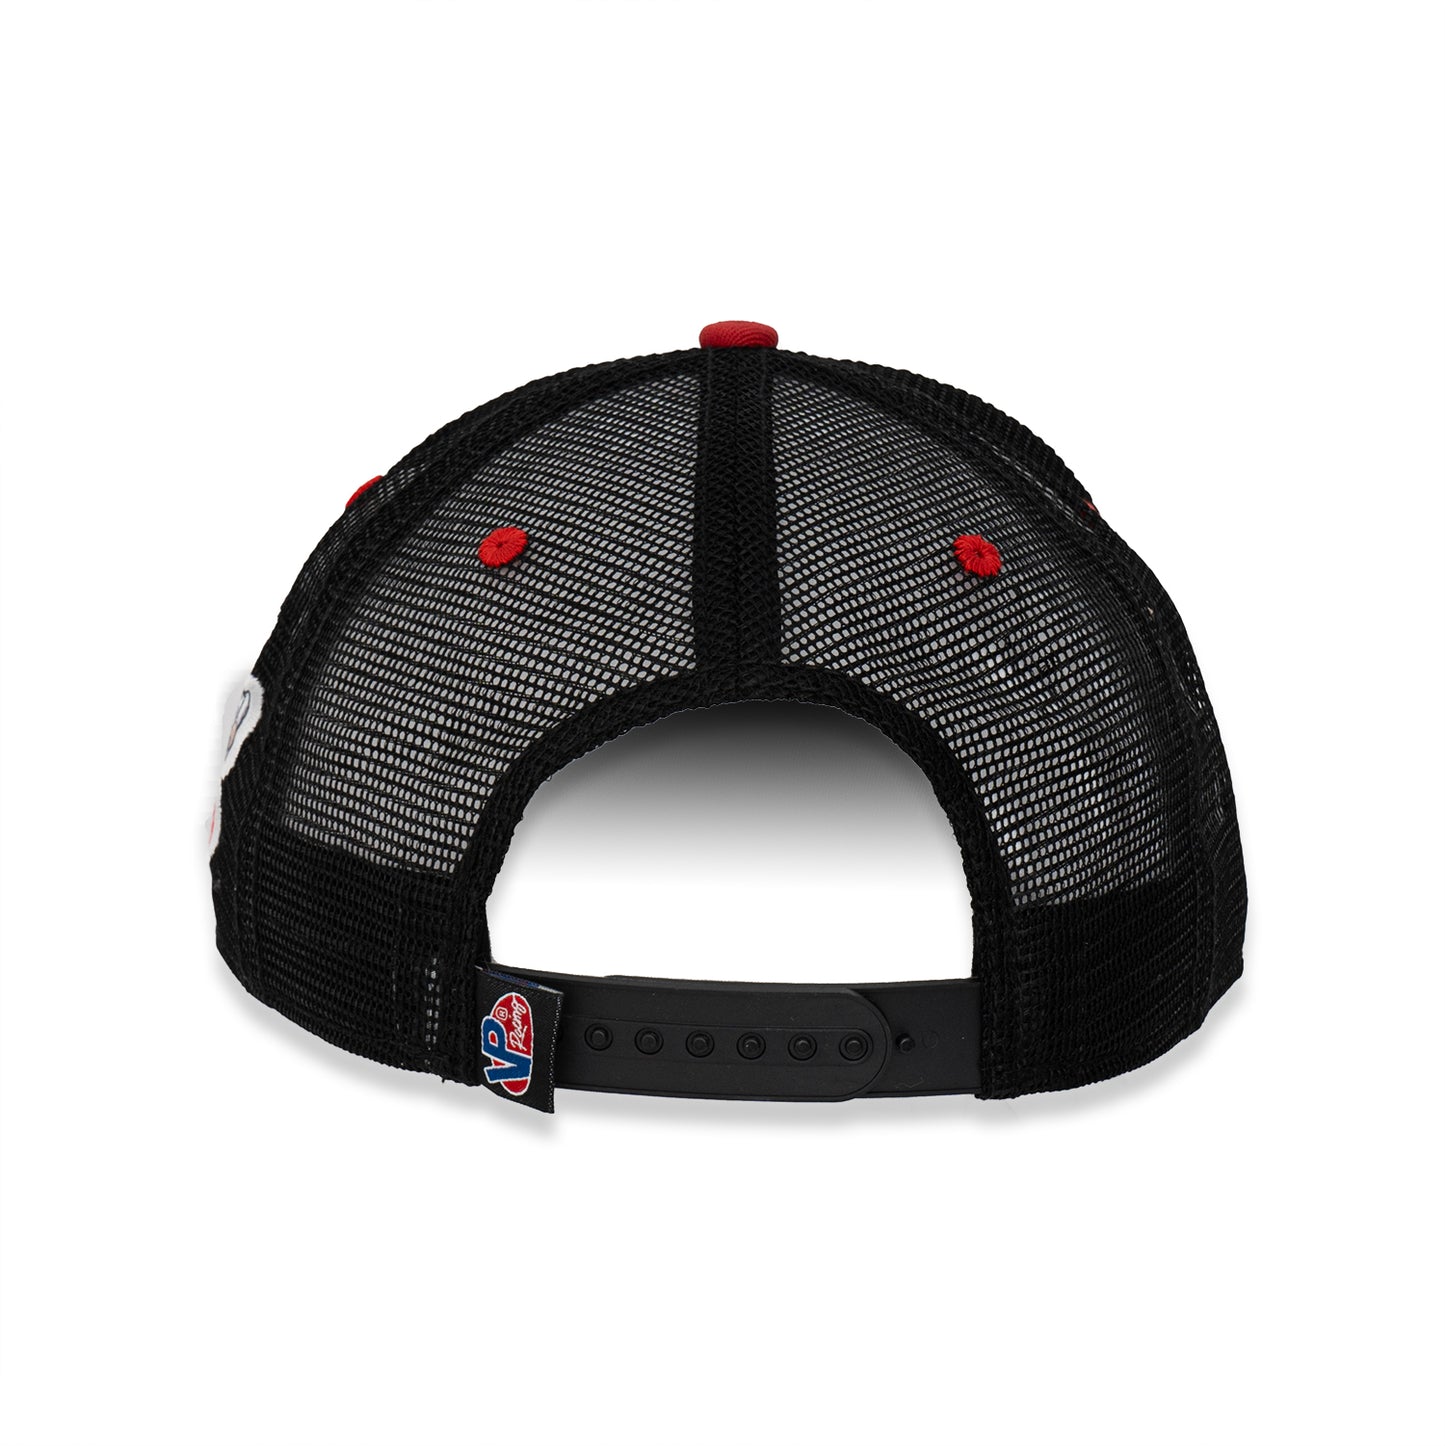 VP Racing Flatbill Snapback Hat - Black